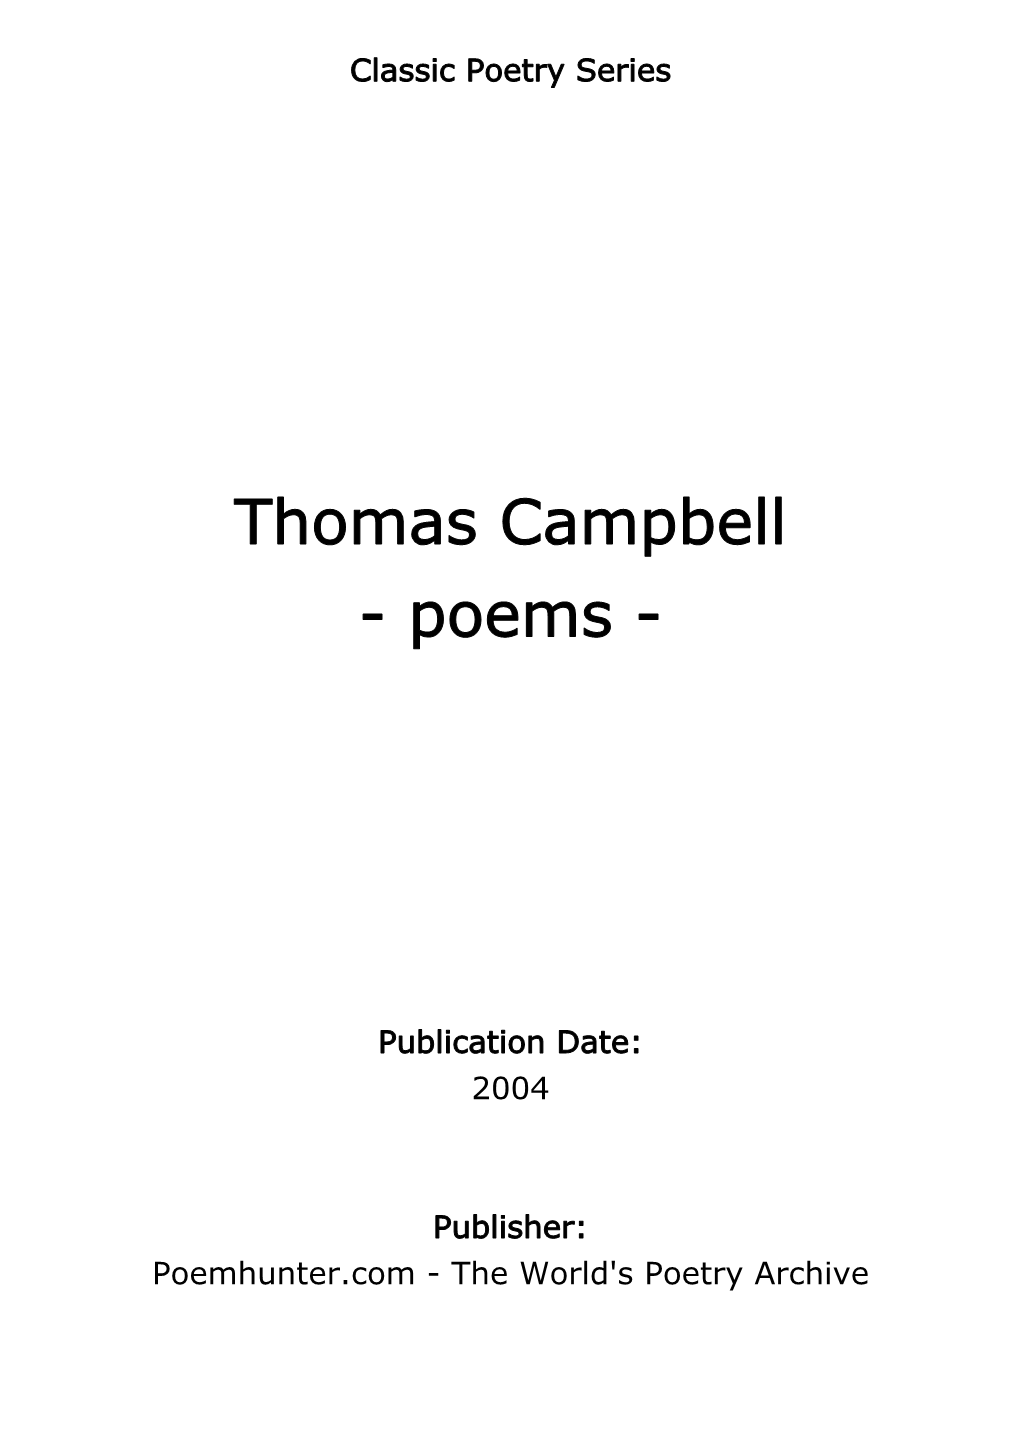 Thomas Campbell - Poems